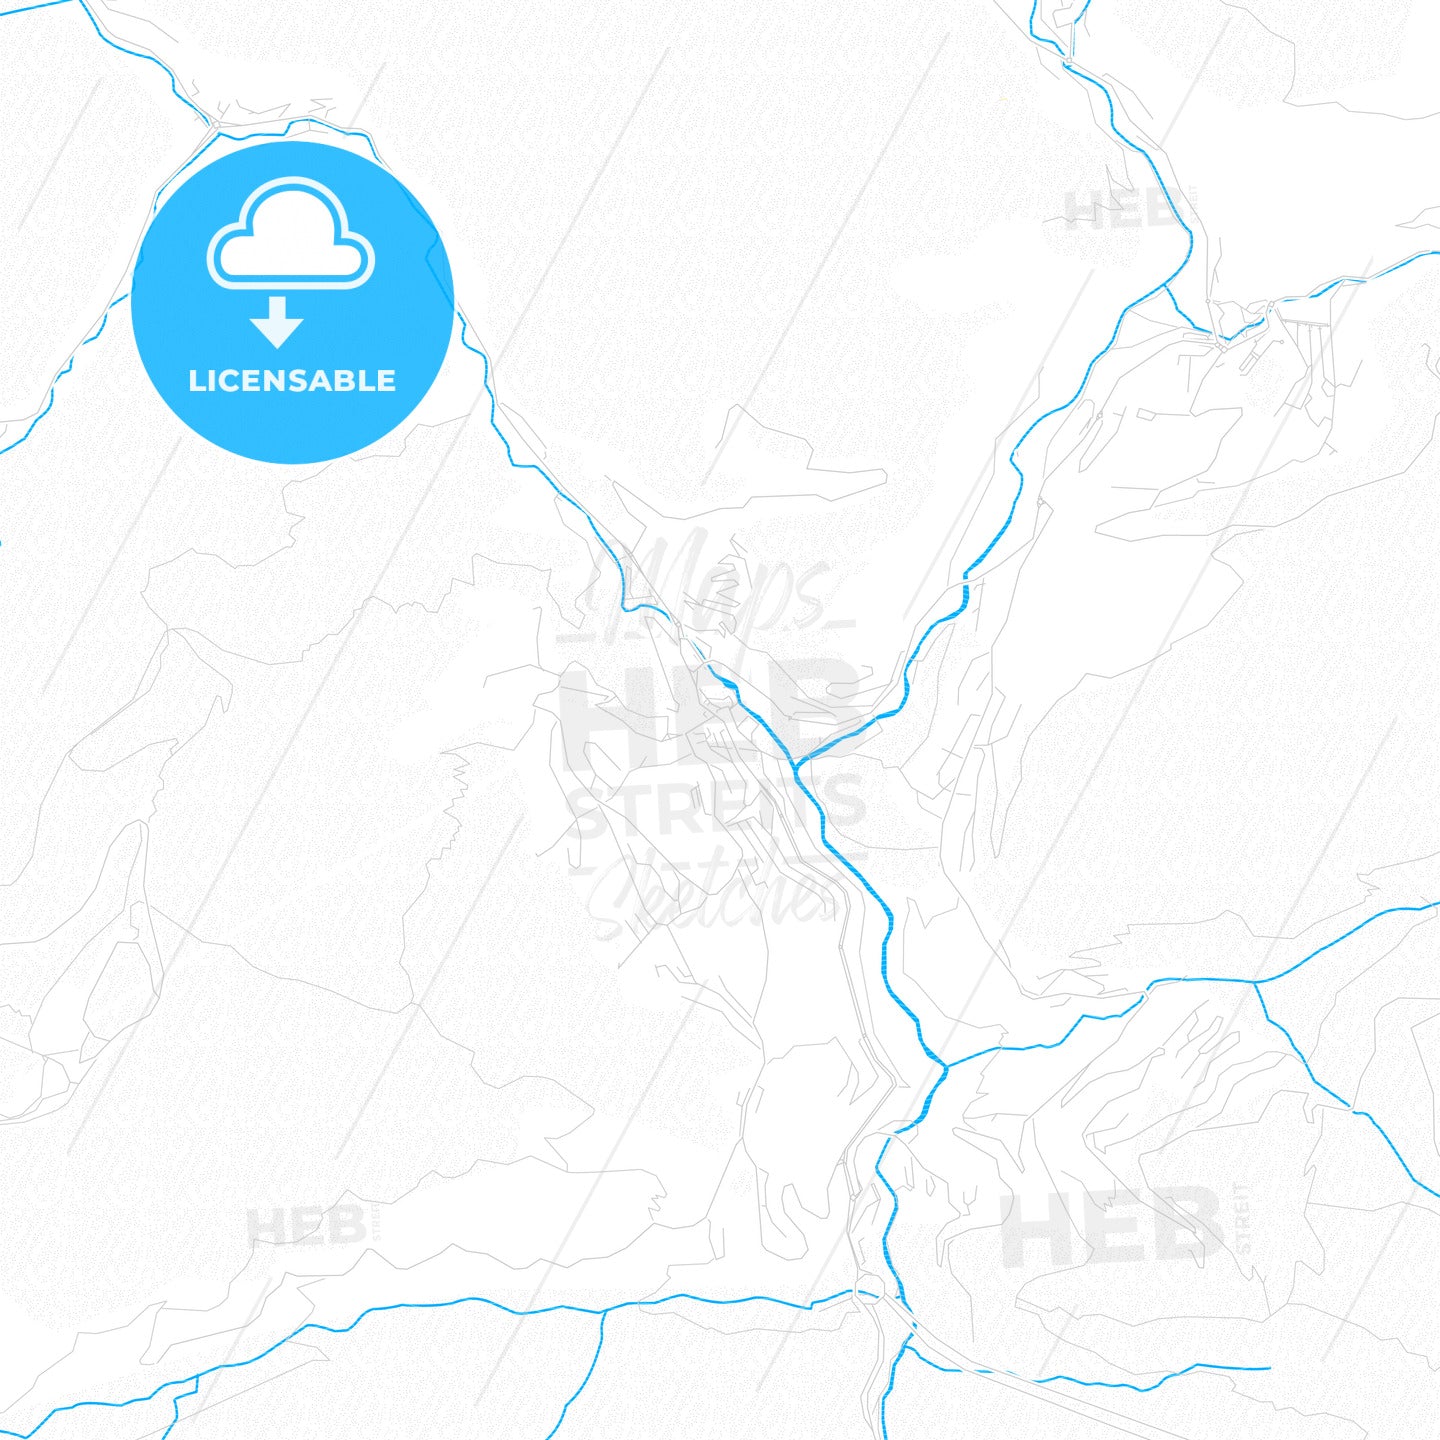 La Massana, Andorra PDF vector map with water in focus